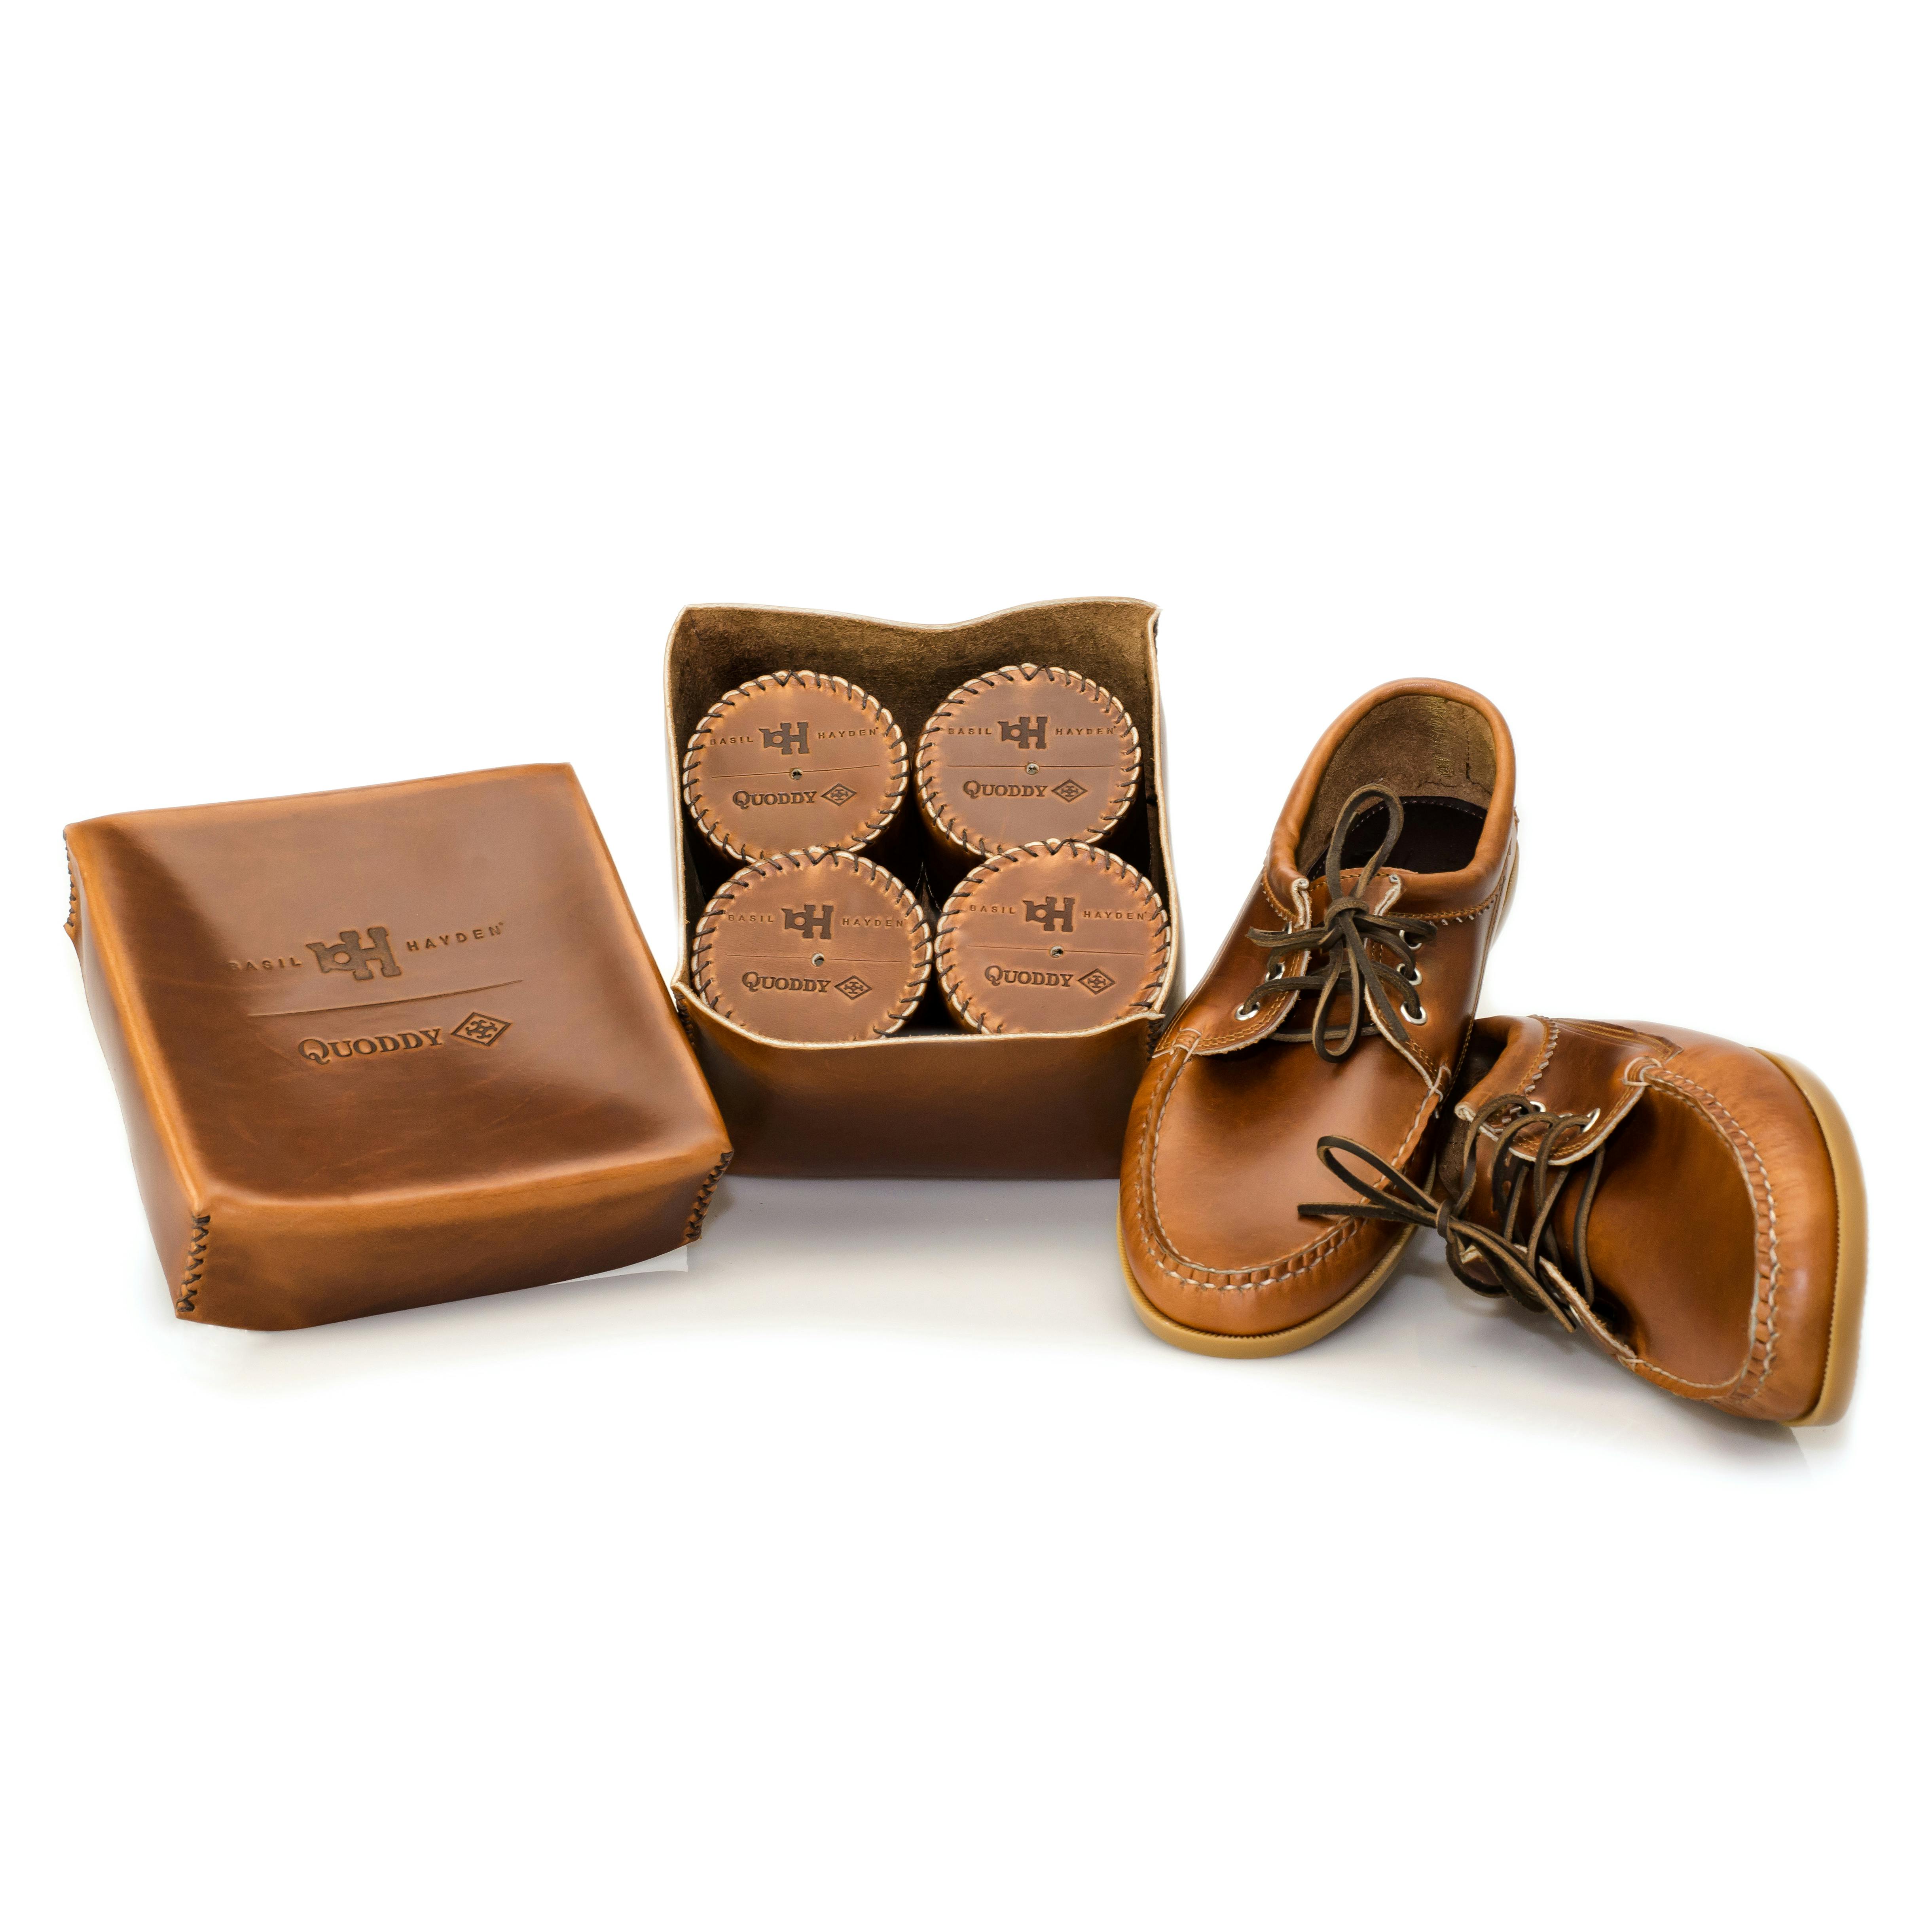 Basil Hayden’s Bourbon & Quoddy Limited Edition Drinking Shoe Gift Set